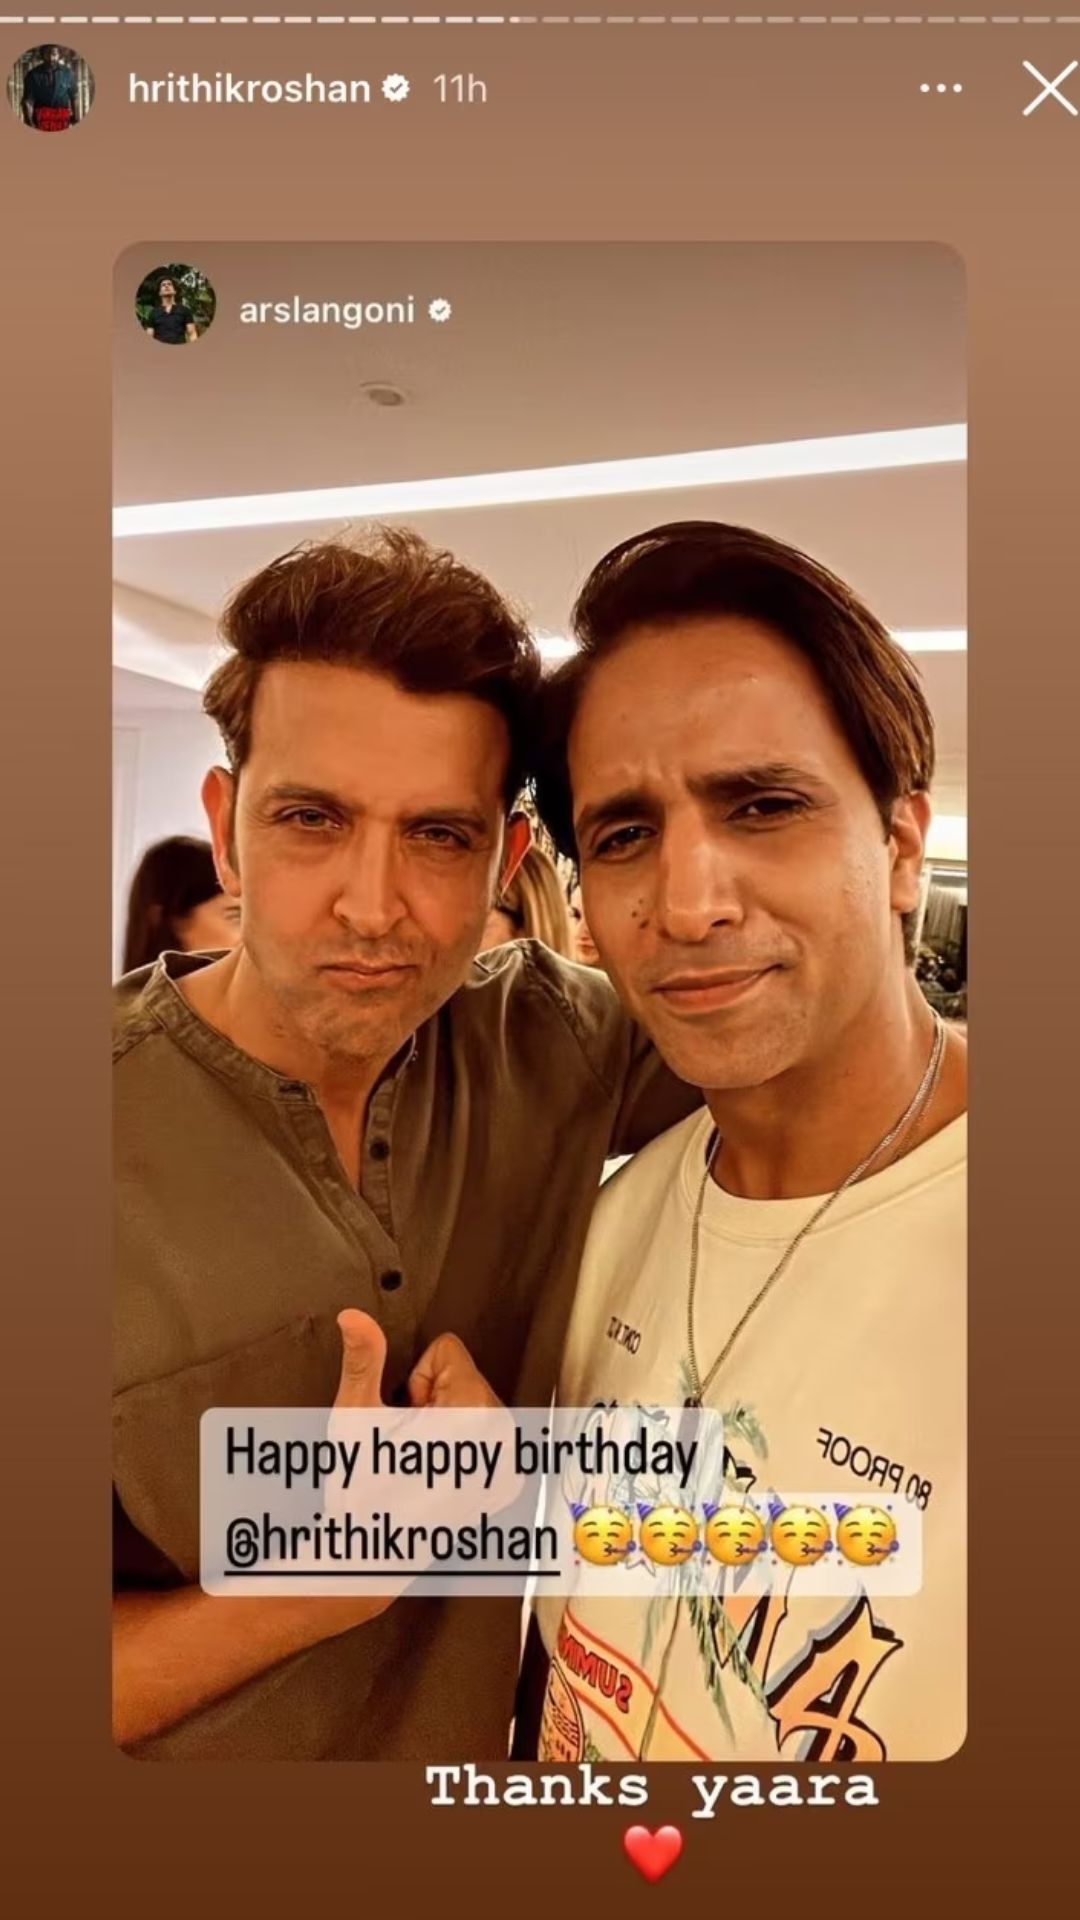 "Hrithik Roshan's Ex-Wife Sussanne Khan's Boyfriend Arslan Goni Wishes him Happy Birthday"